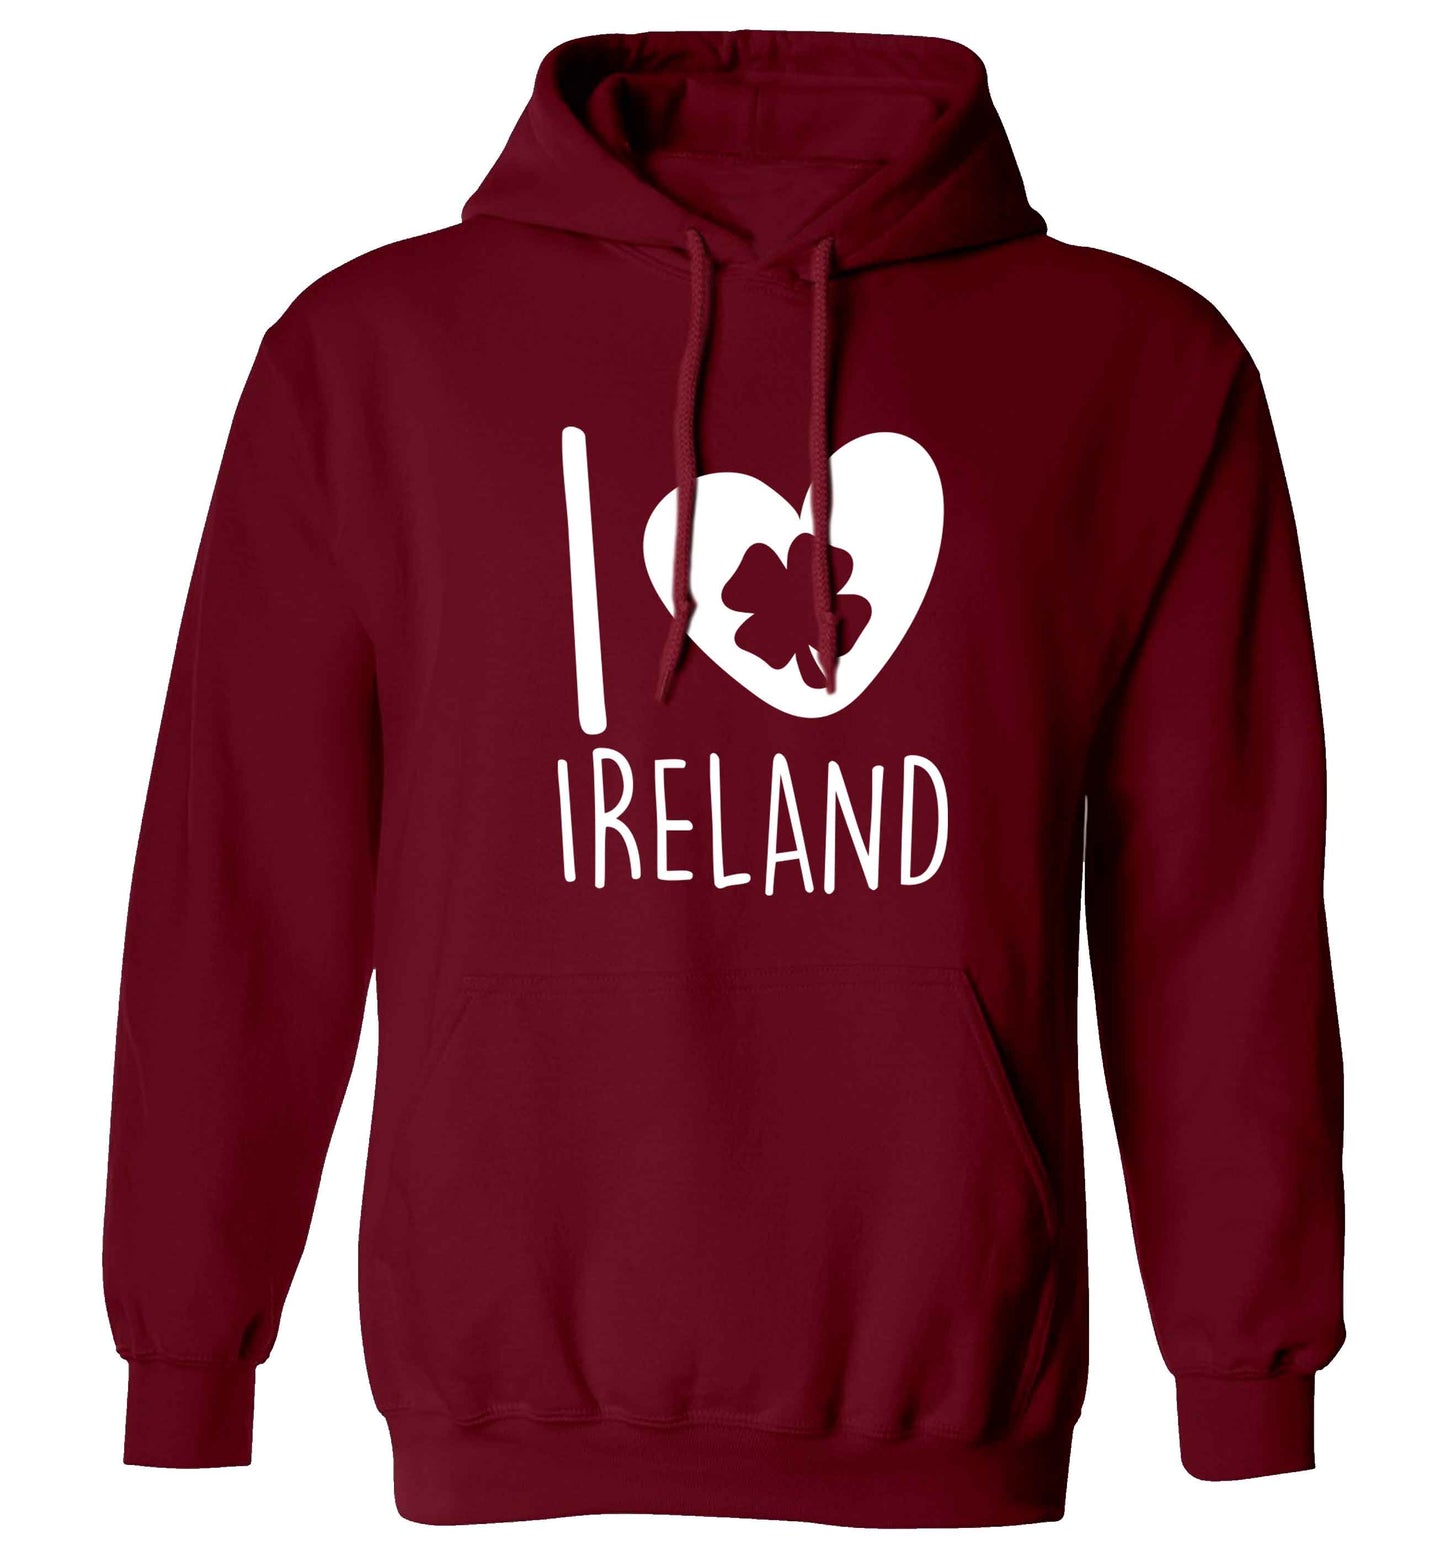 I love Ireland adults unisex maroon hoodie 2XL